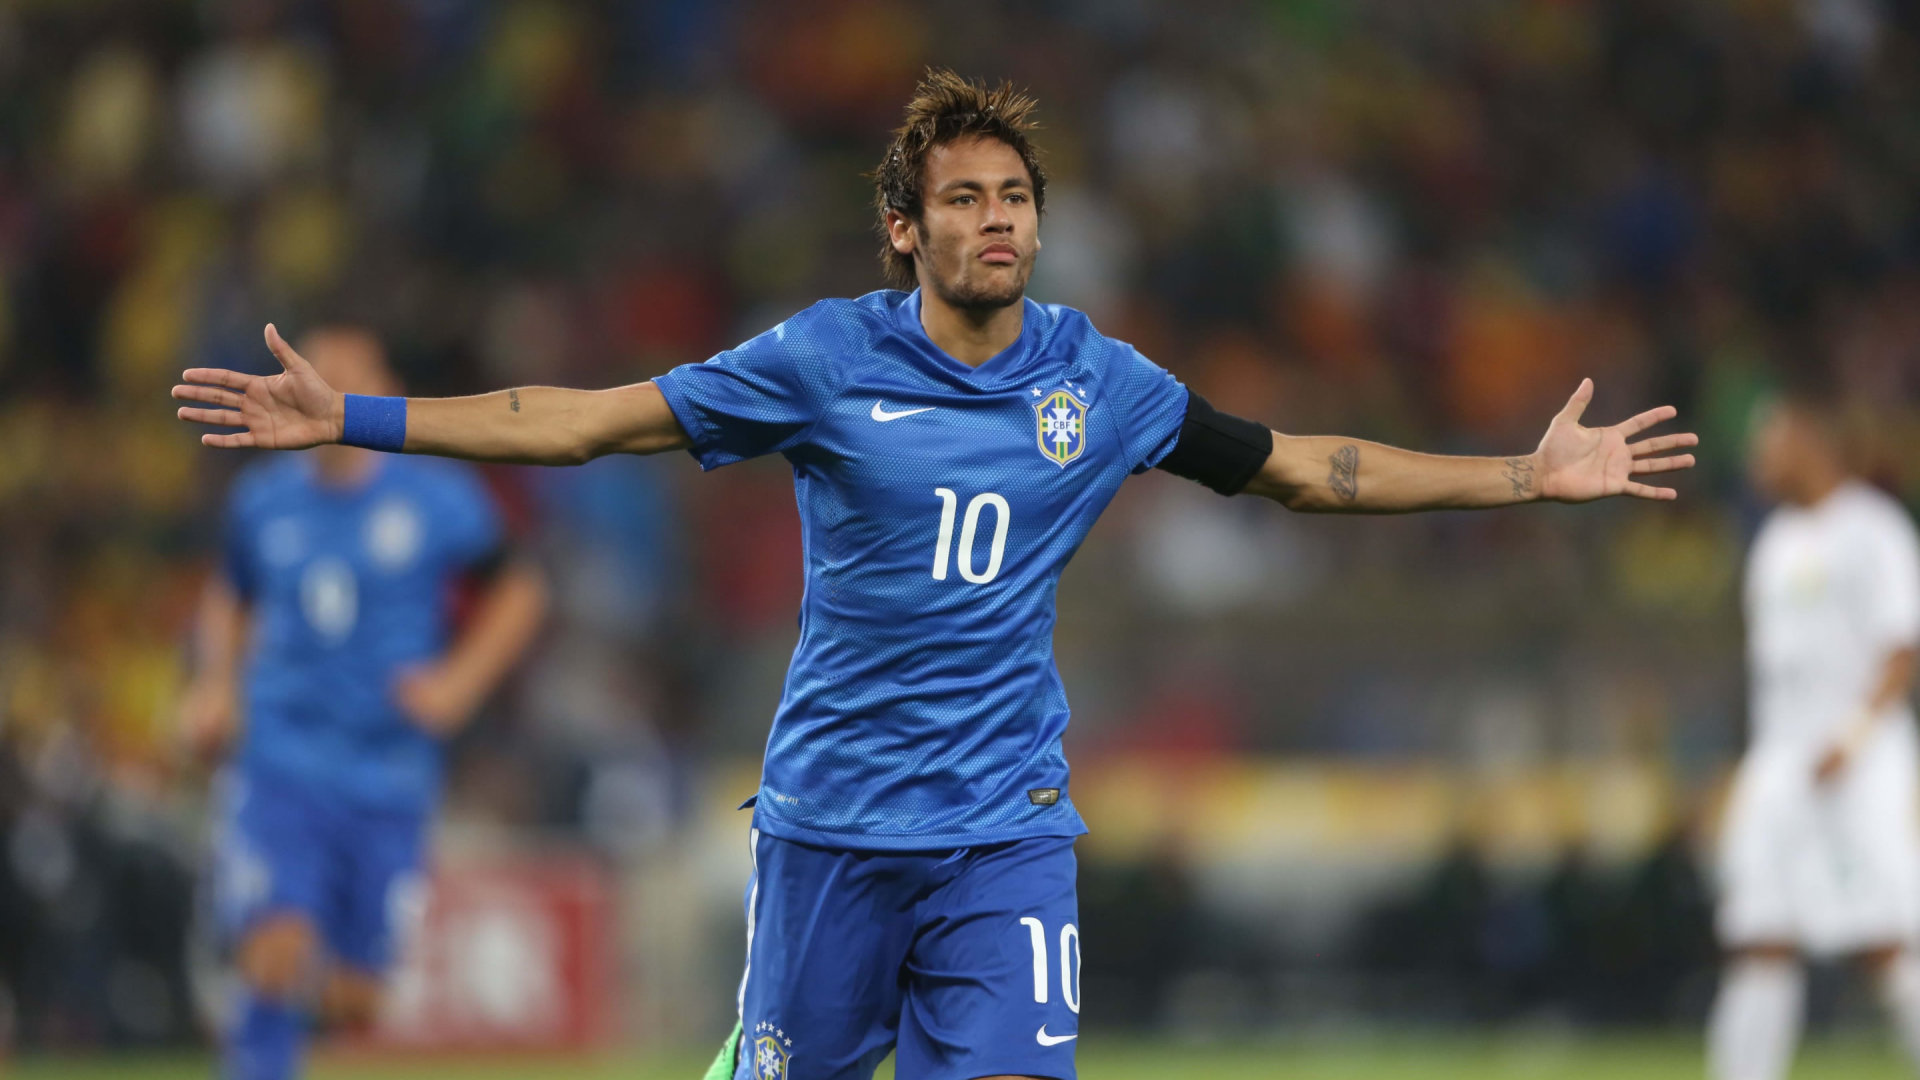 Neymar Brazil blue jersey celebrating - Neymar Wallpapers